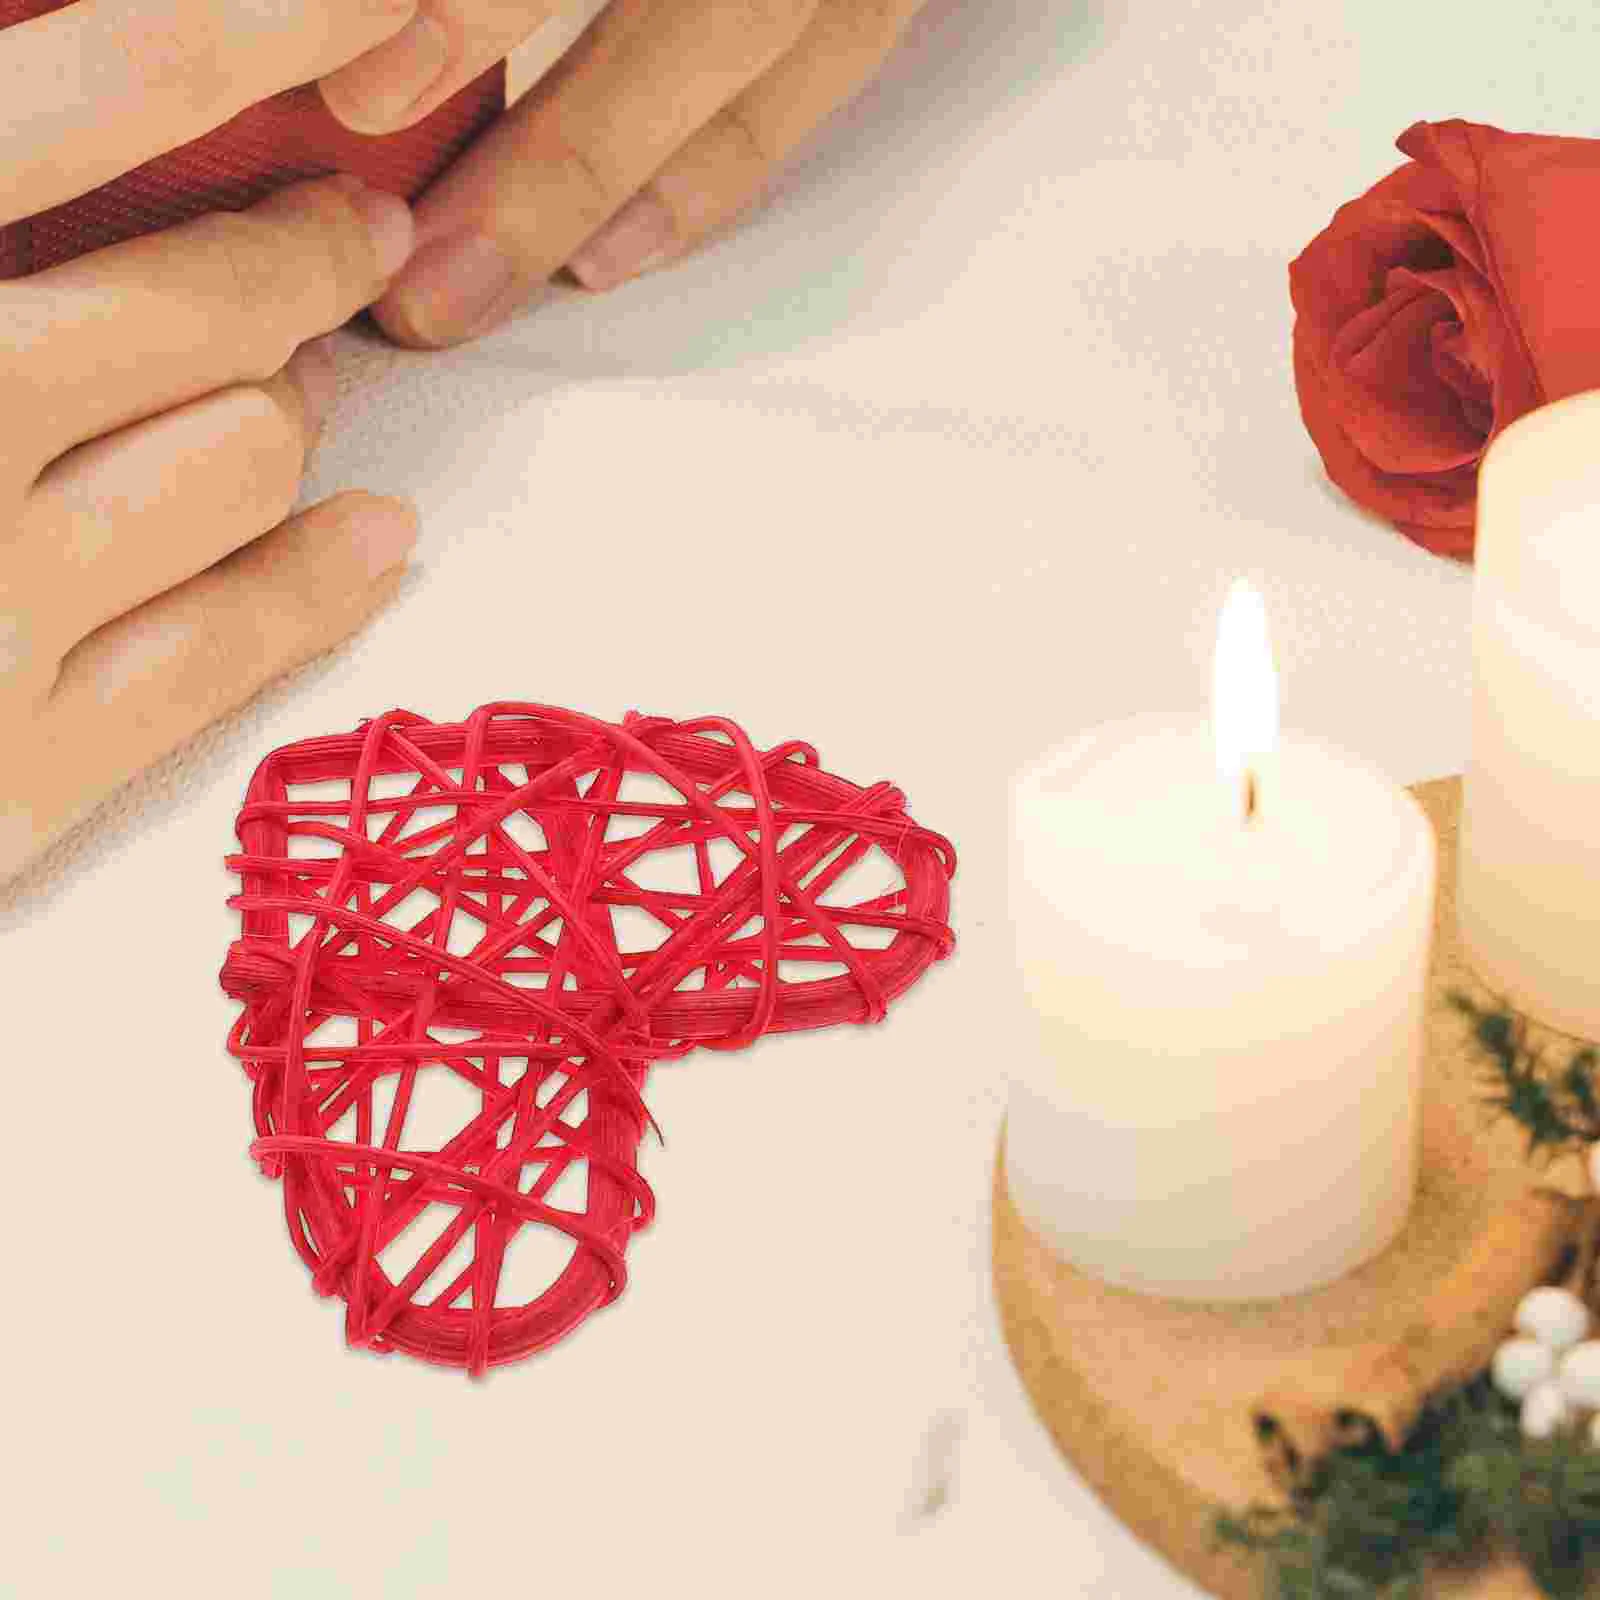 

Rattan Wicker Heart Toys Filler Vase Hanging Day Shaped Valentine S Wedding Craft Hamster Teething Molar Animal Chinchilla Chew